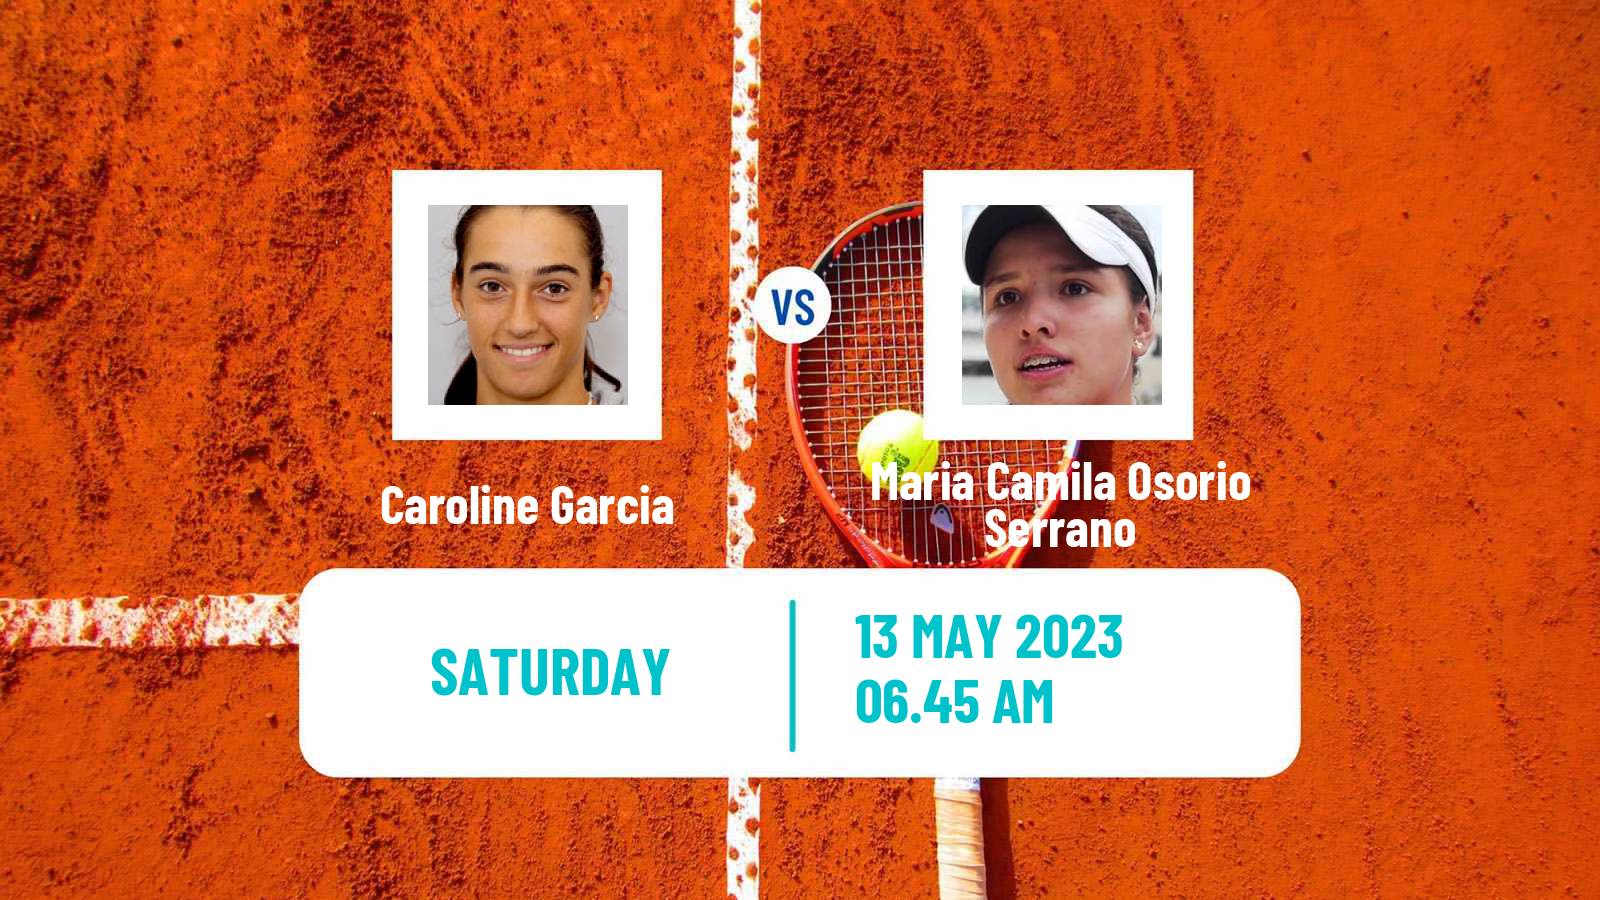 Tennis WTA Roma Caroline Garcia - Maria Camila Osorio Serrano